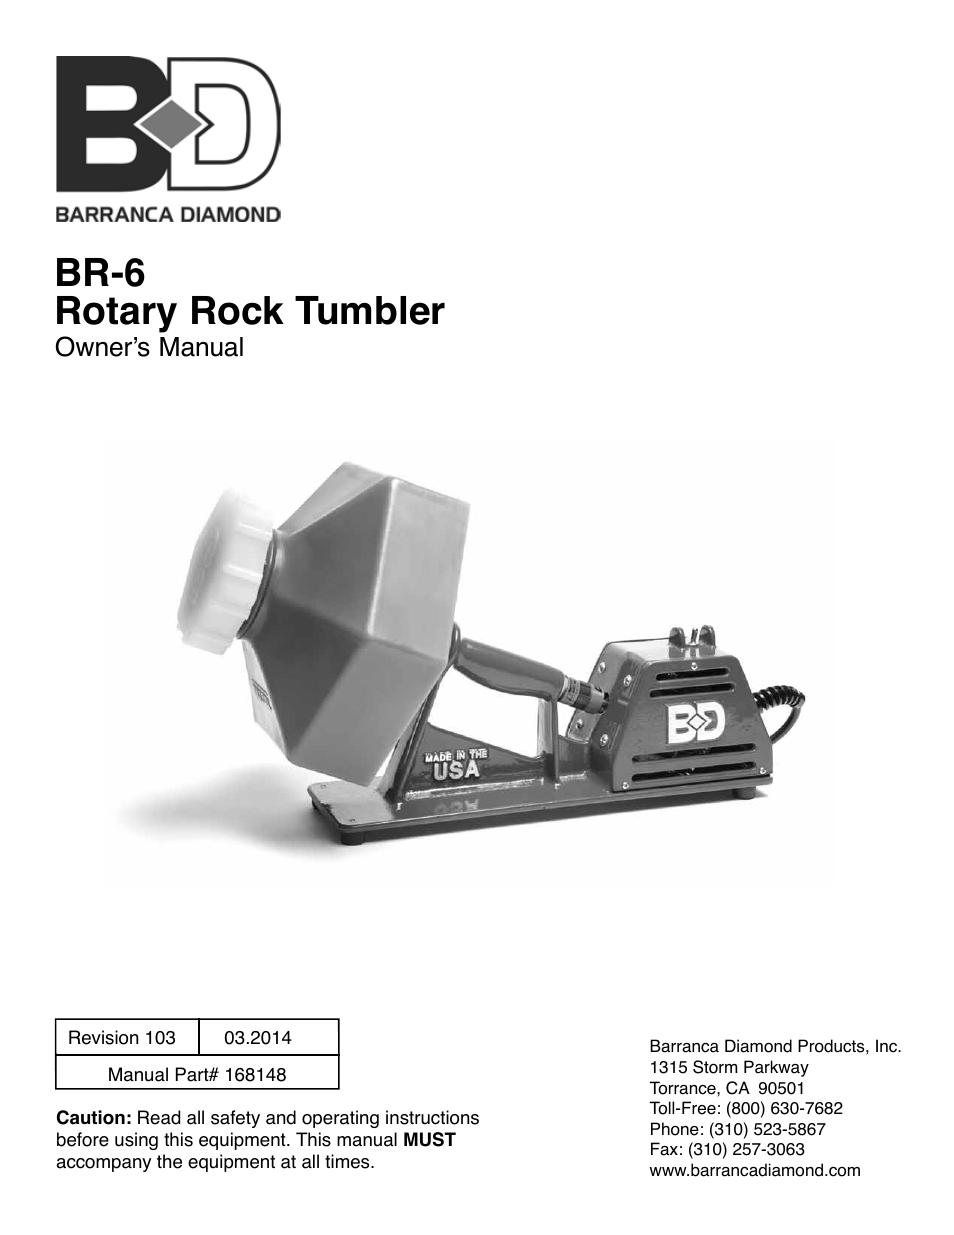 BR-6 Rotary Rock Tumbler